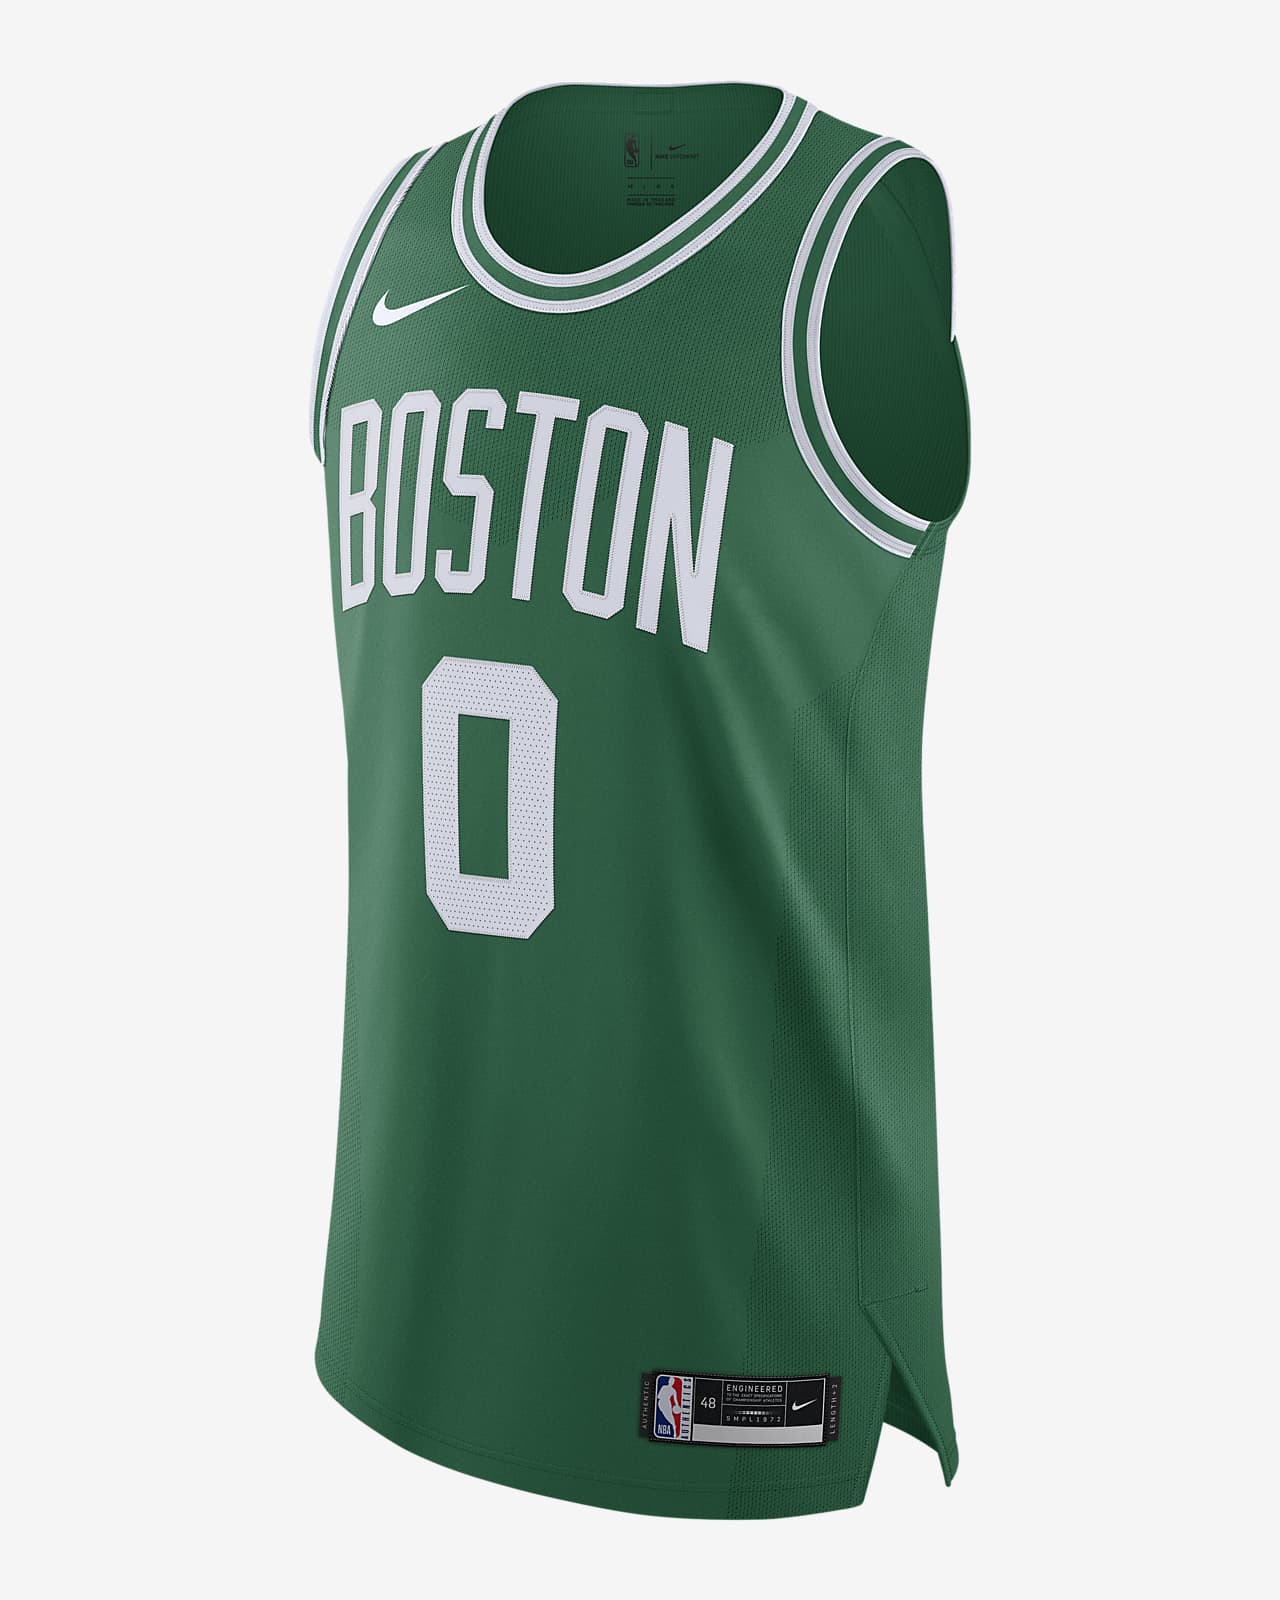 Jersey Nike de la NBA Authentic para hombre Jayson Tatum Celtics Icon Edition 2020